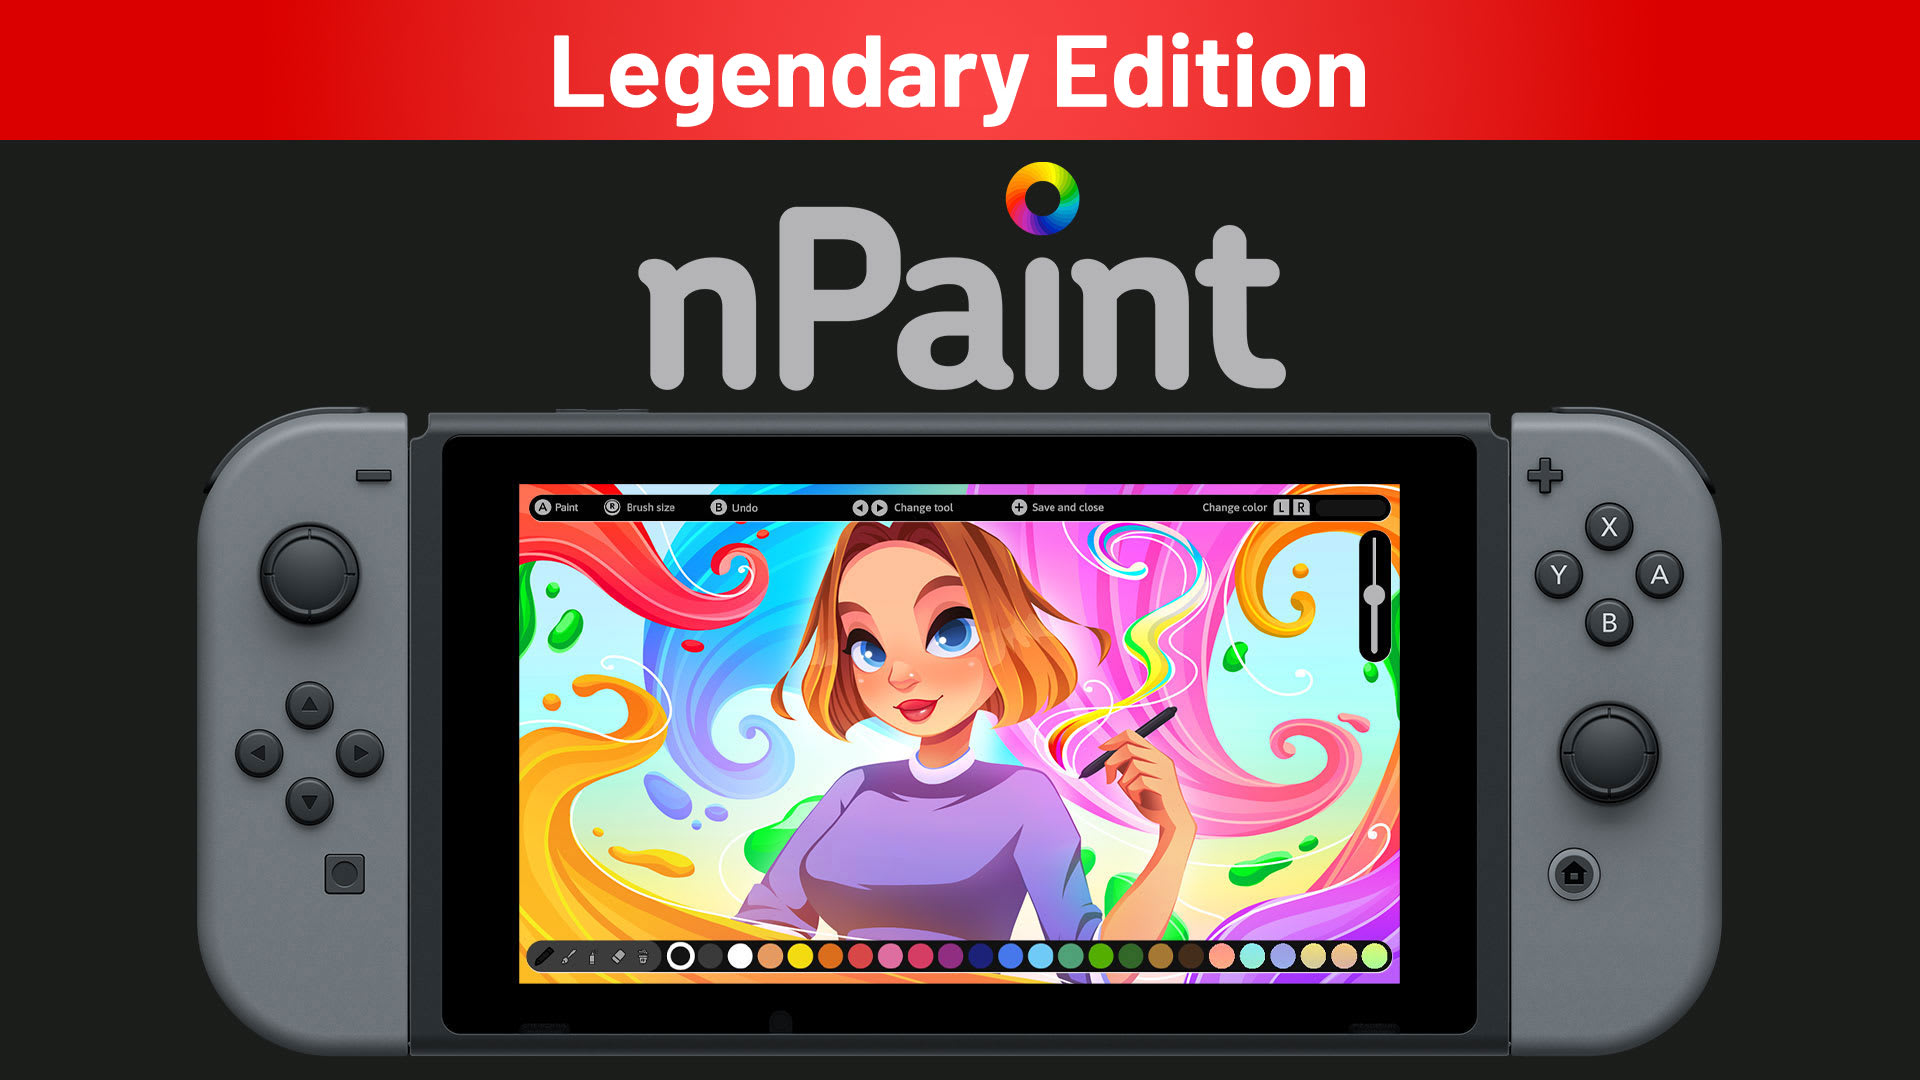 nPaint Legendary Edition